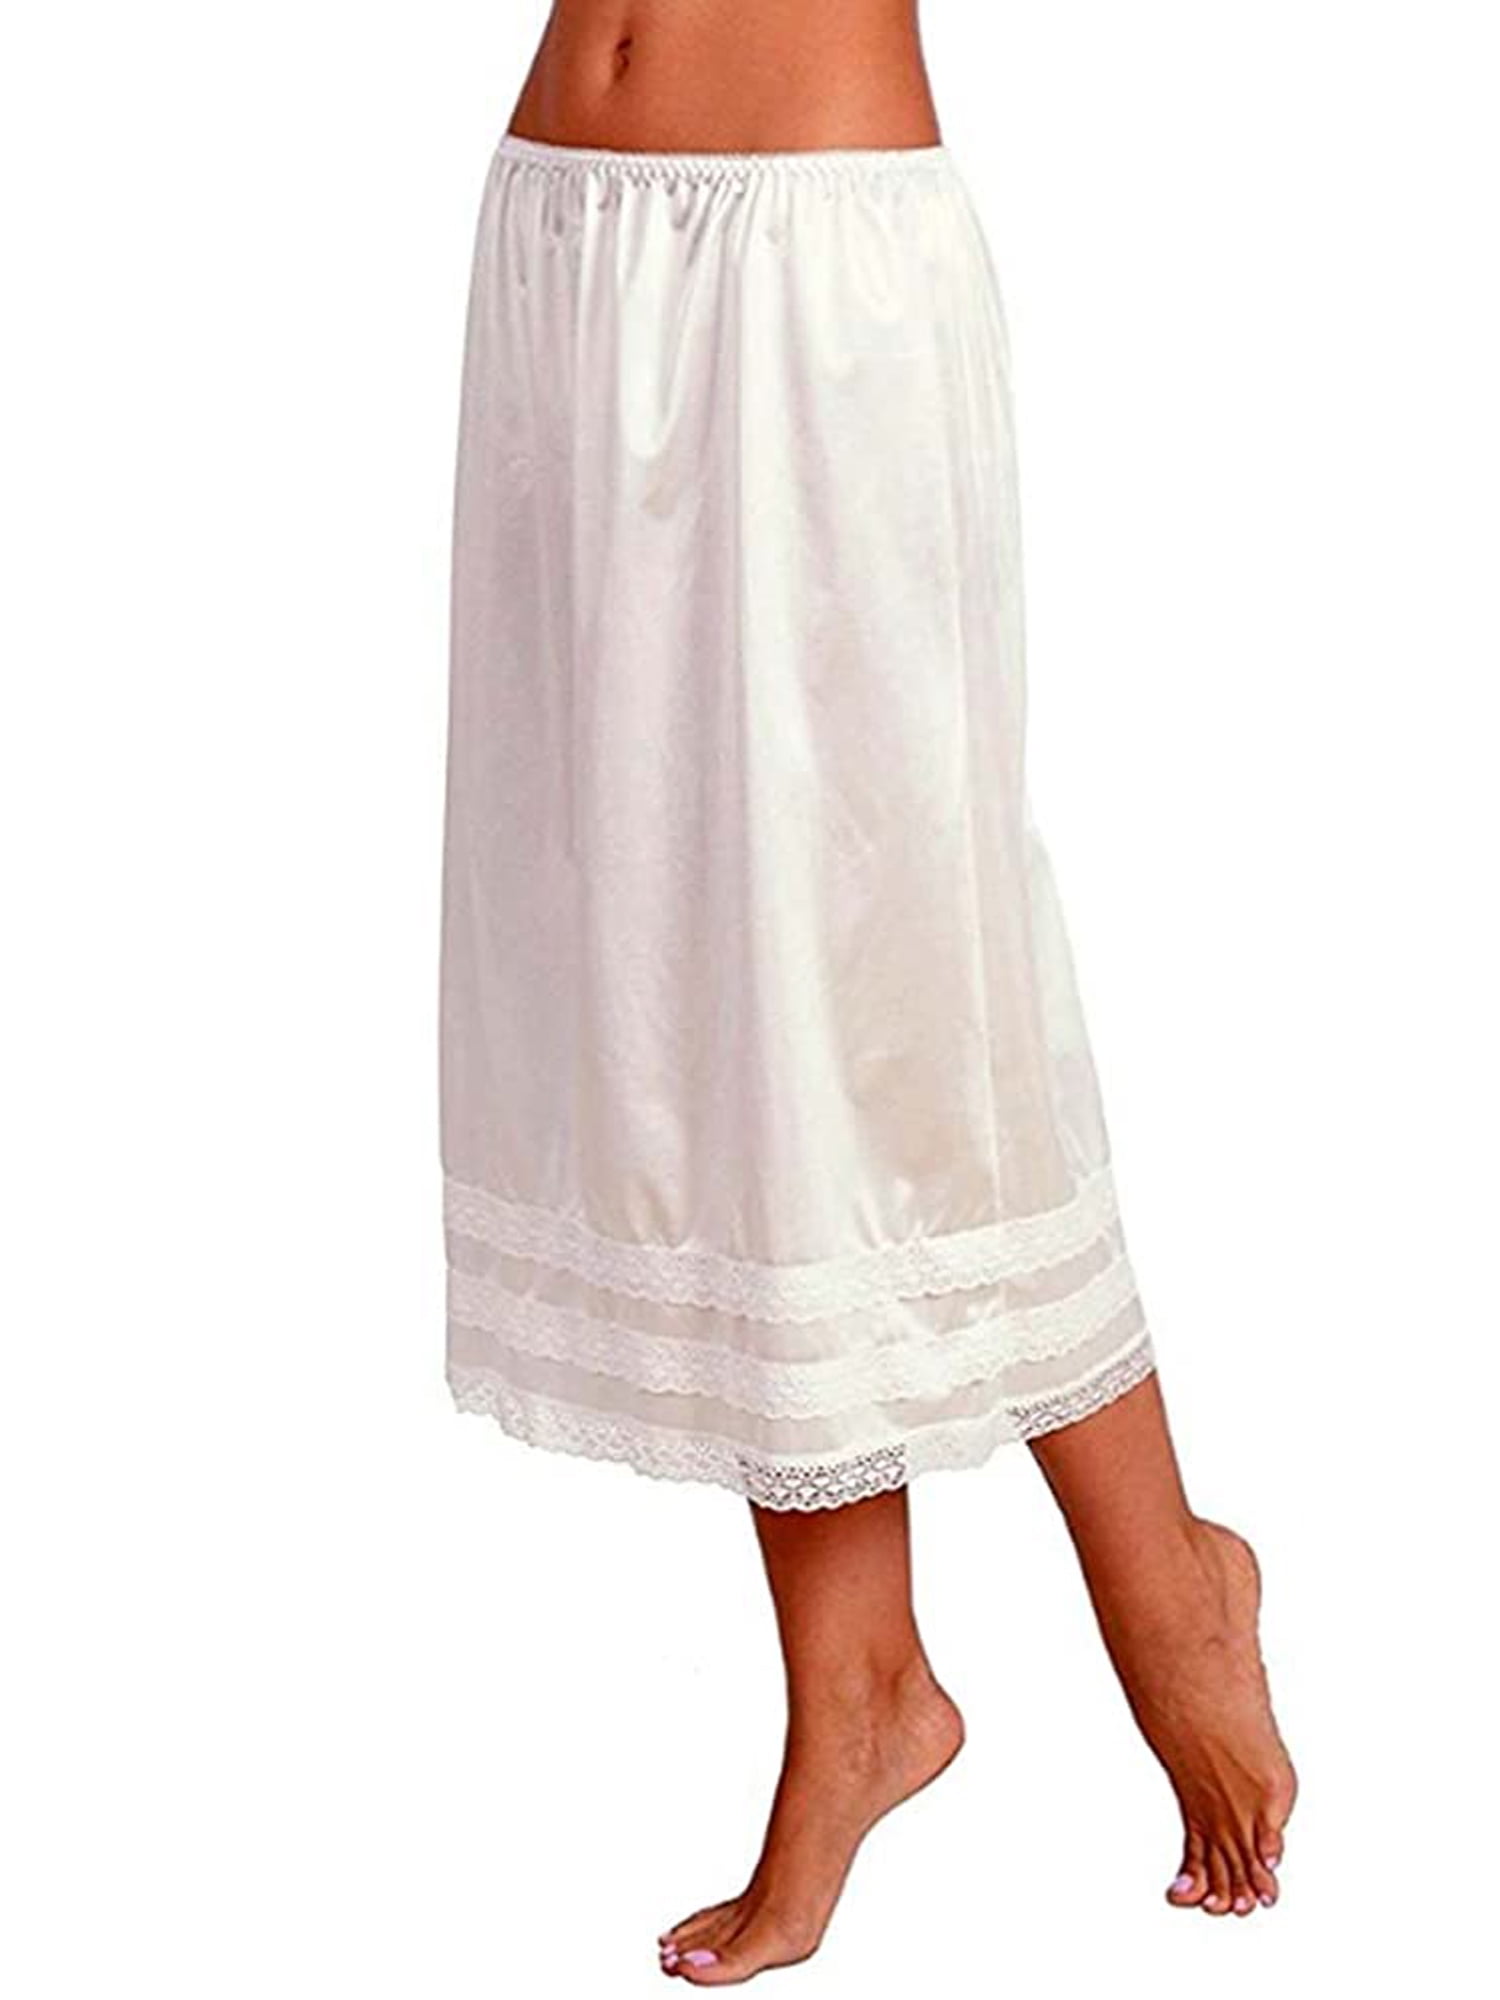 Womens Skirts Satin Elastic Waist 3-Tiers Slip Floral Lace Hem Skirt Underskirt 